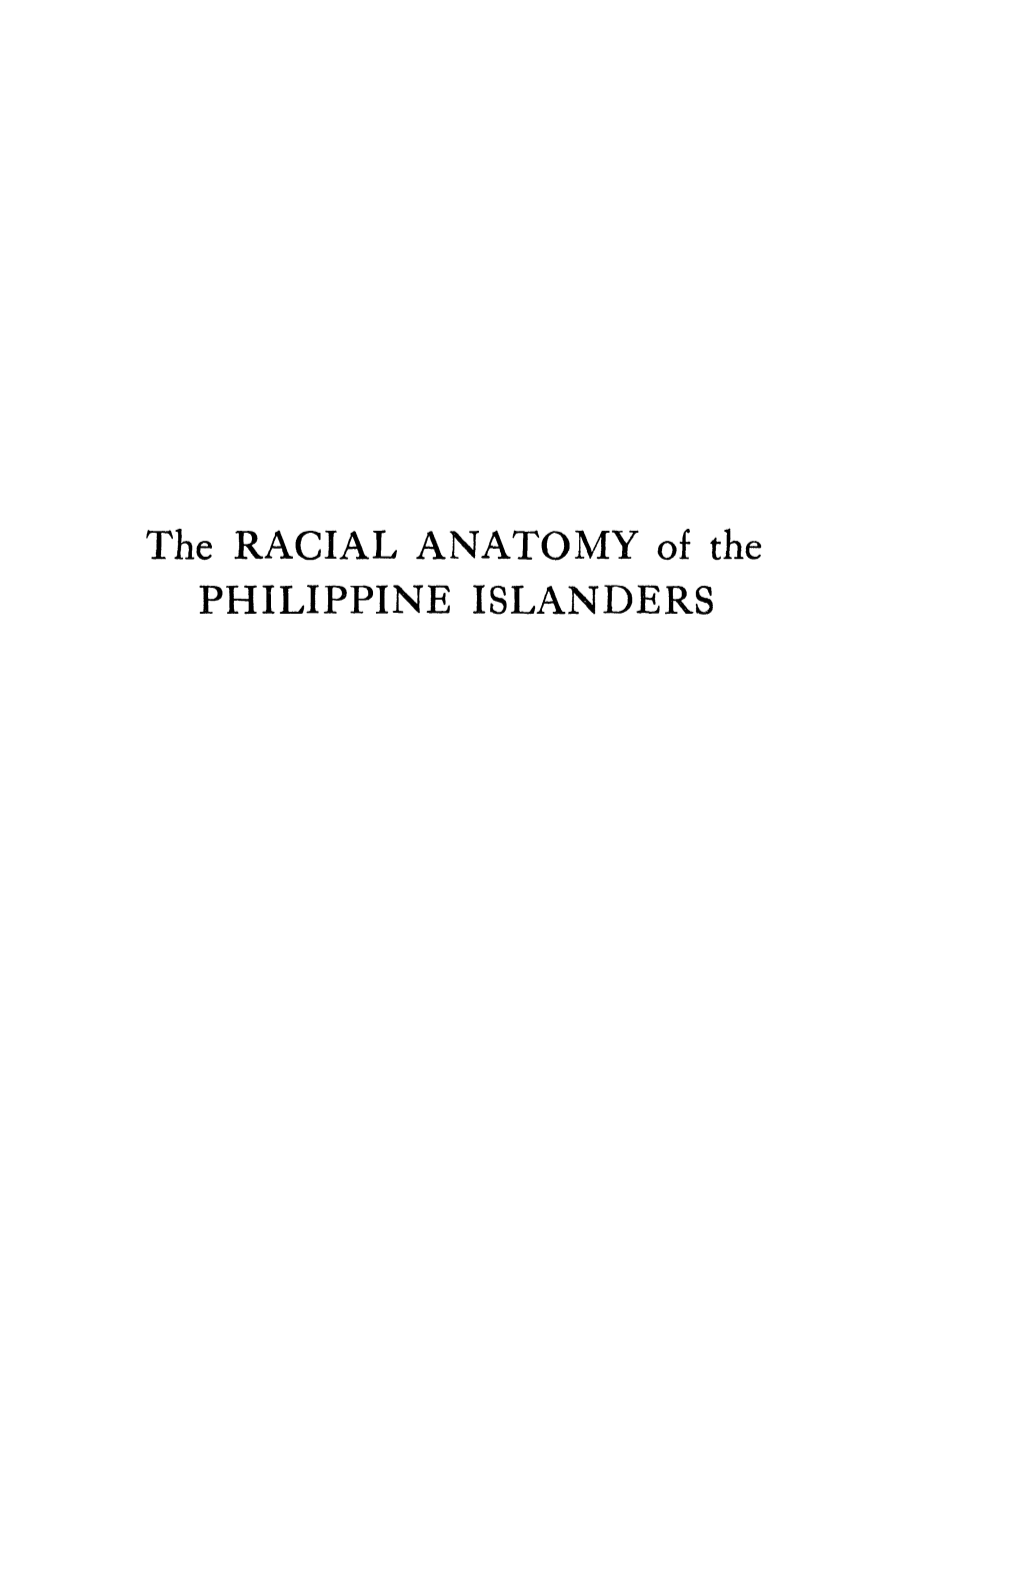 The RACIAL ANATOMY of the PHILIPPINE ISLANDERS